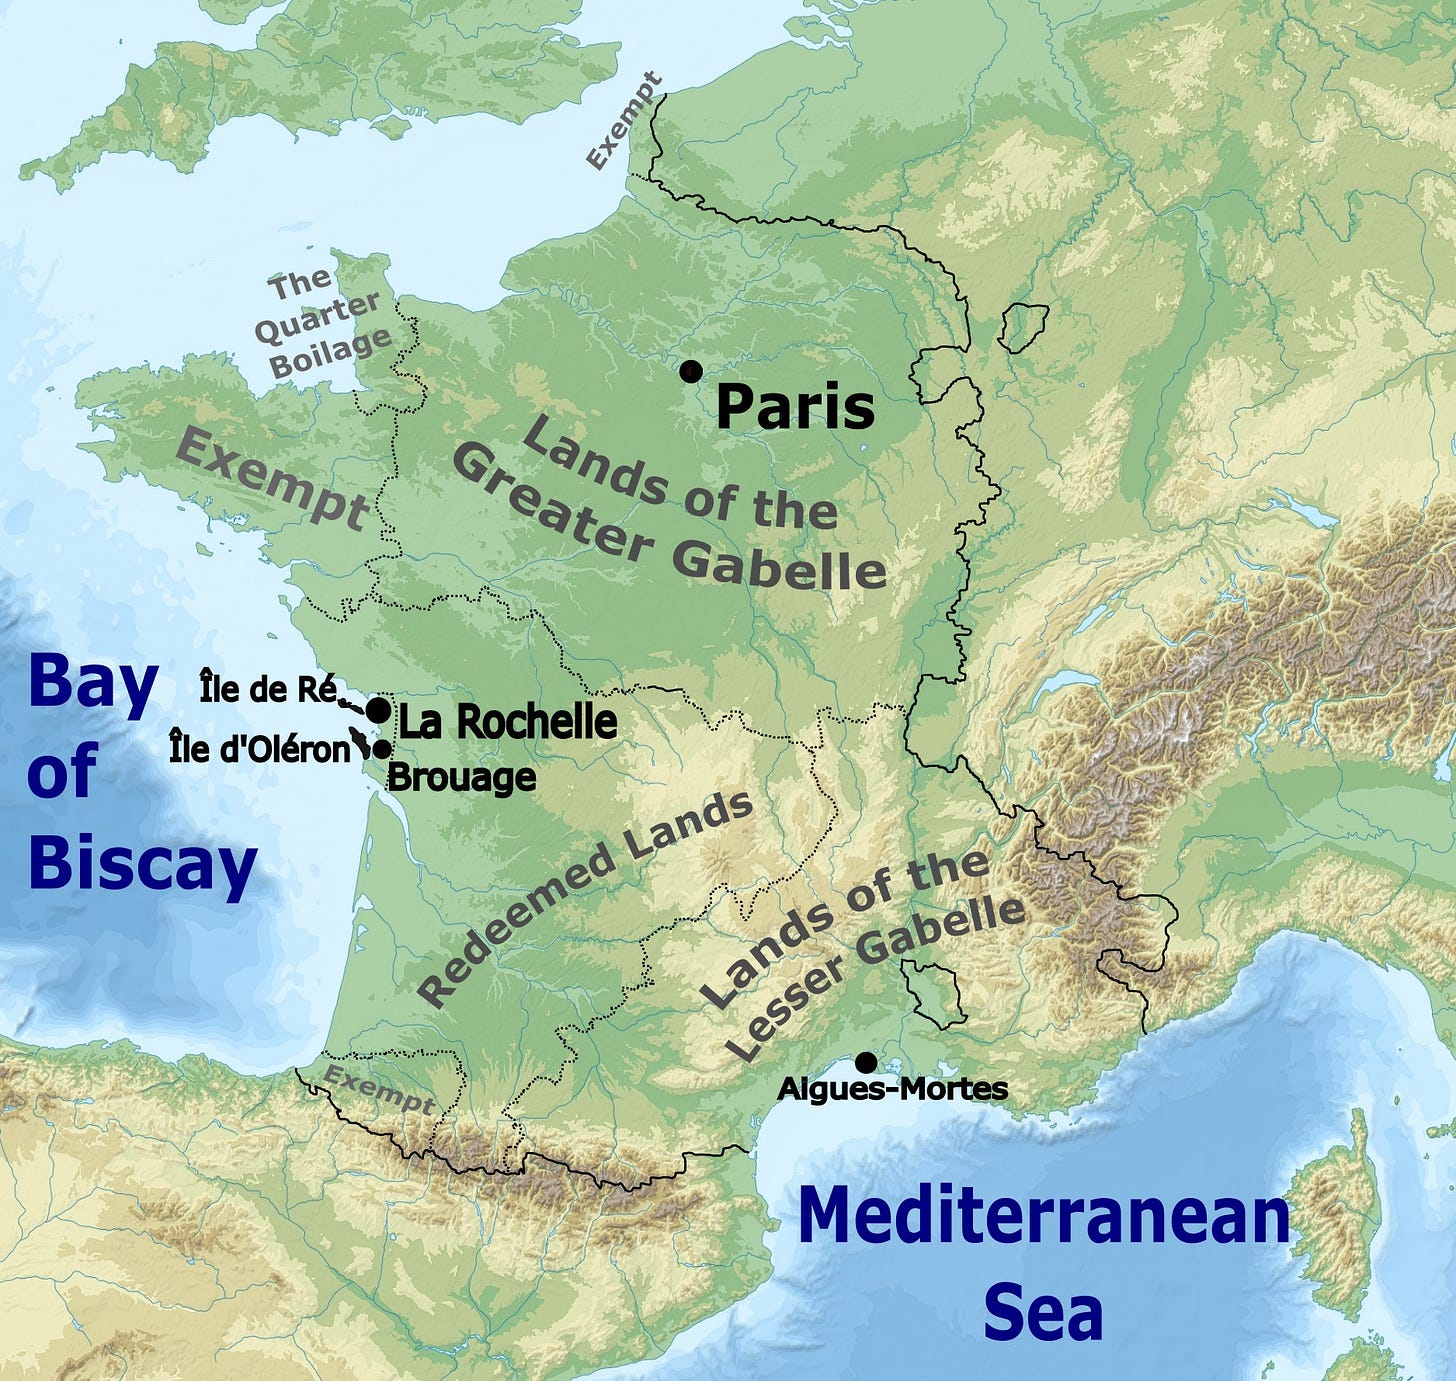 France gabelle regions in 1600